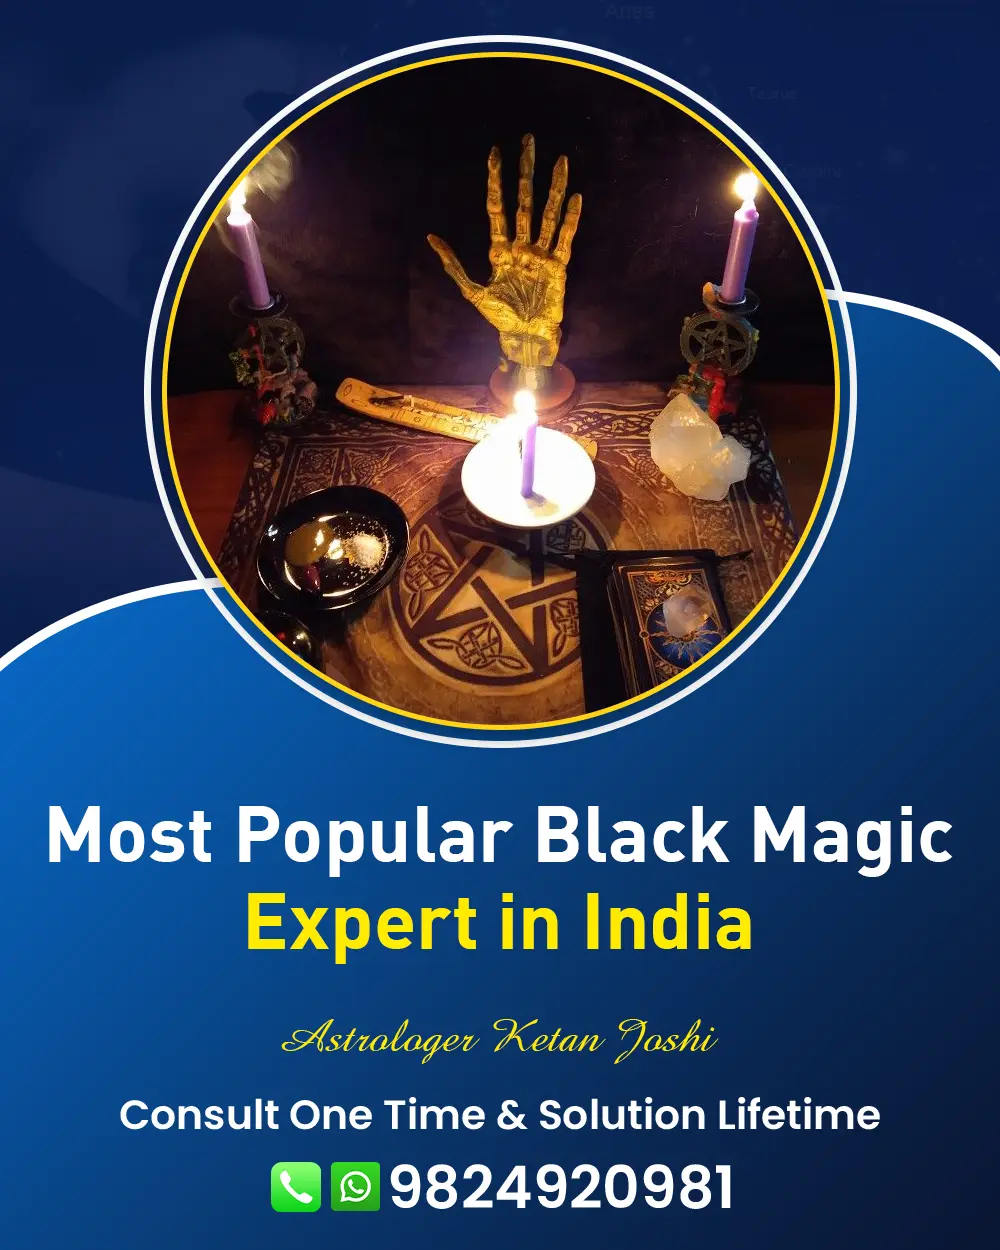 Black Magic Specialist Astrologer In Dhanera